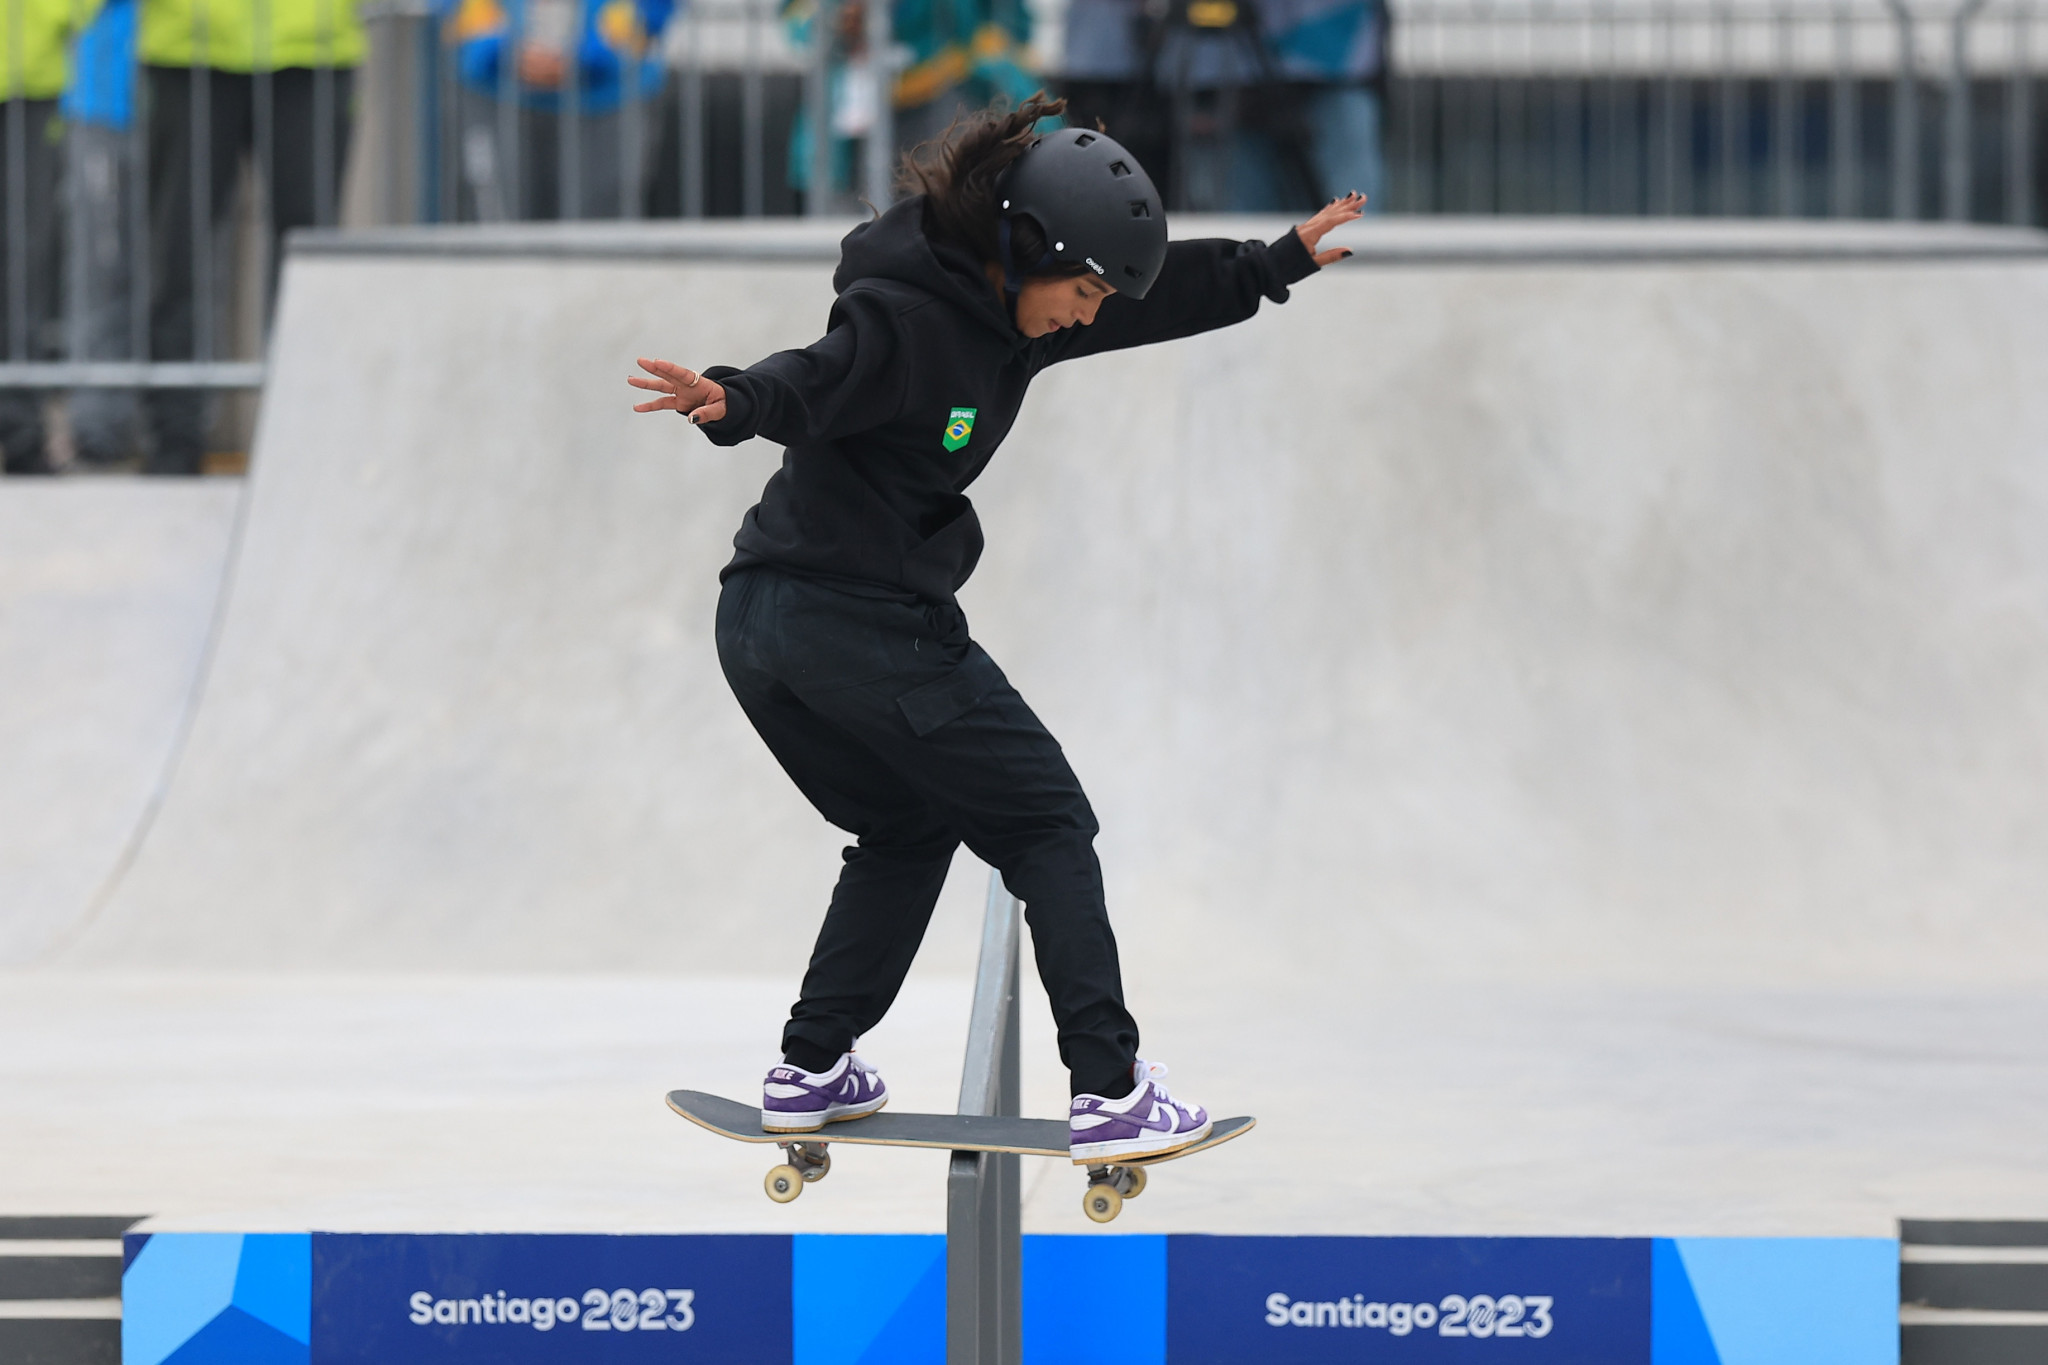 Brazil dominate skateboarding as Kelly wins sport climbing gold at Santiago 2023